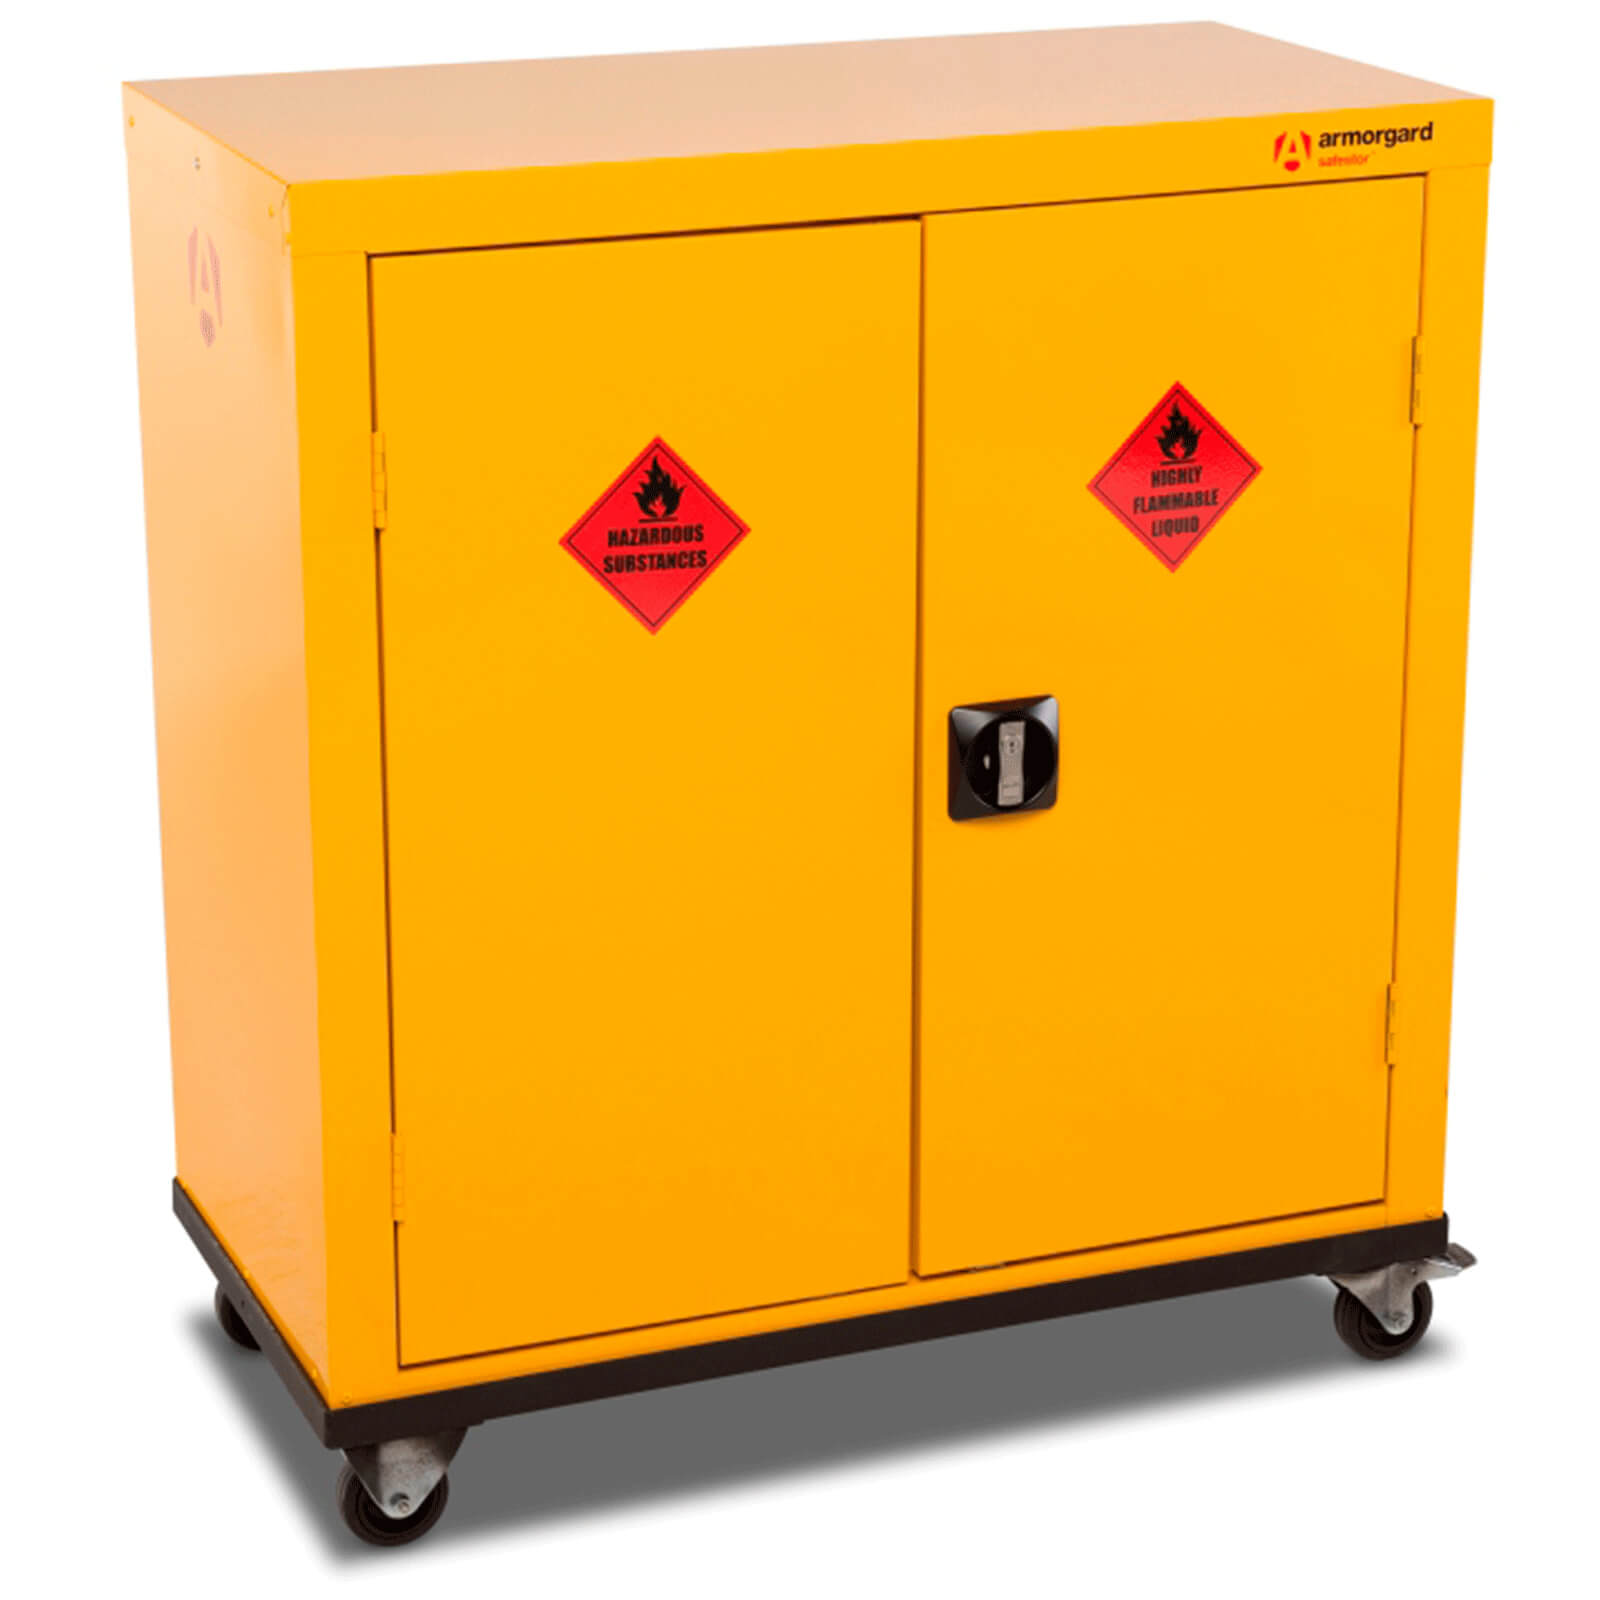 Image of Armorgard Safestor Hazardous Materials Secure Mobile Storage Cabinet 900mm 465mm 1010mm